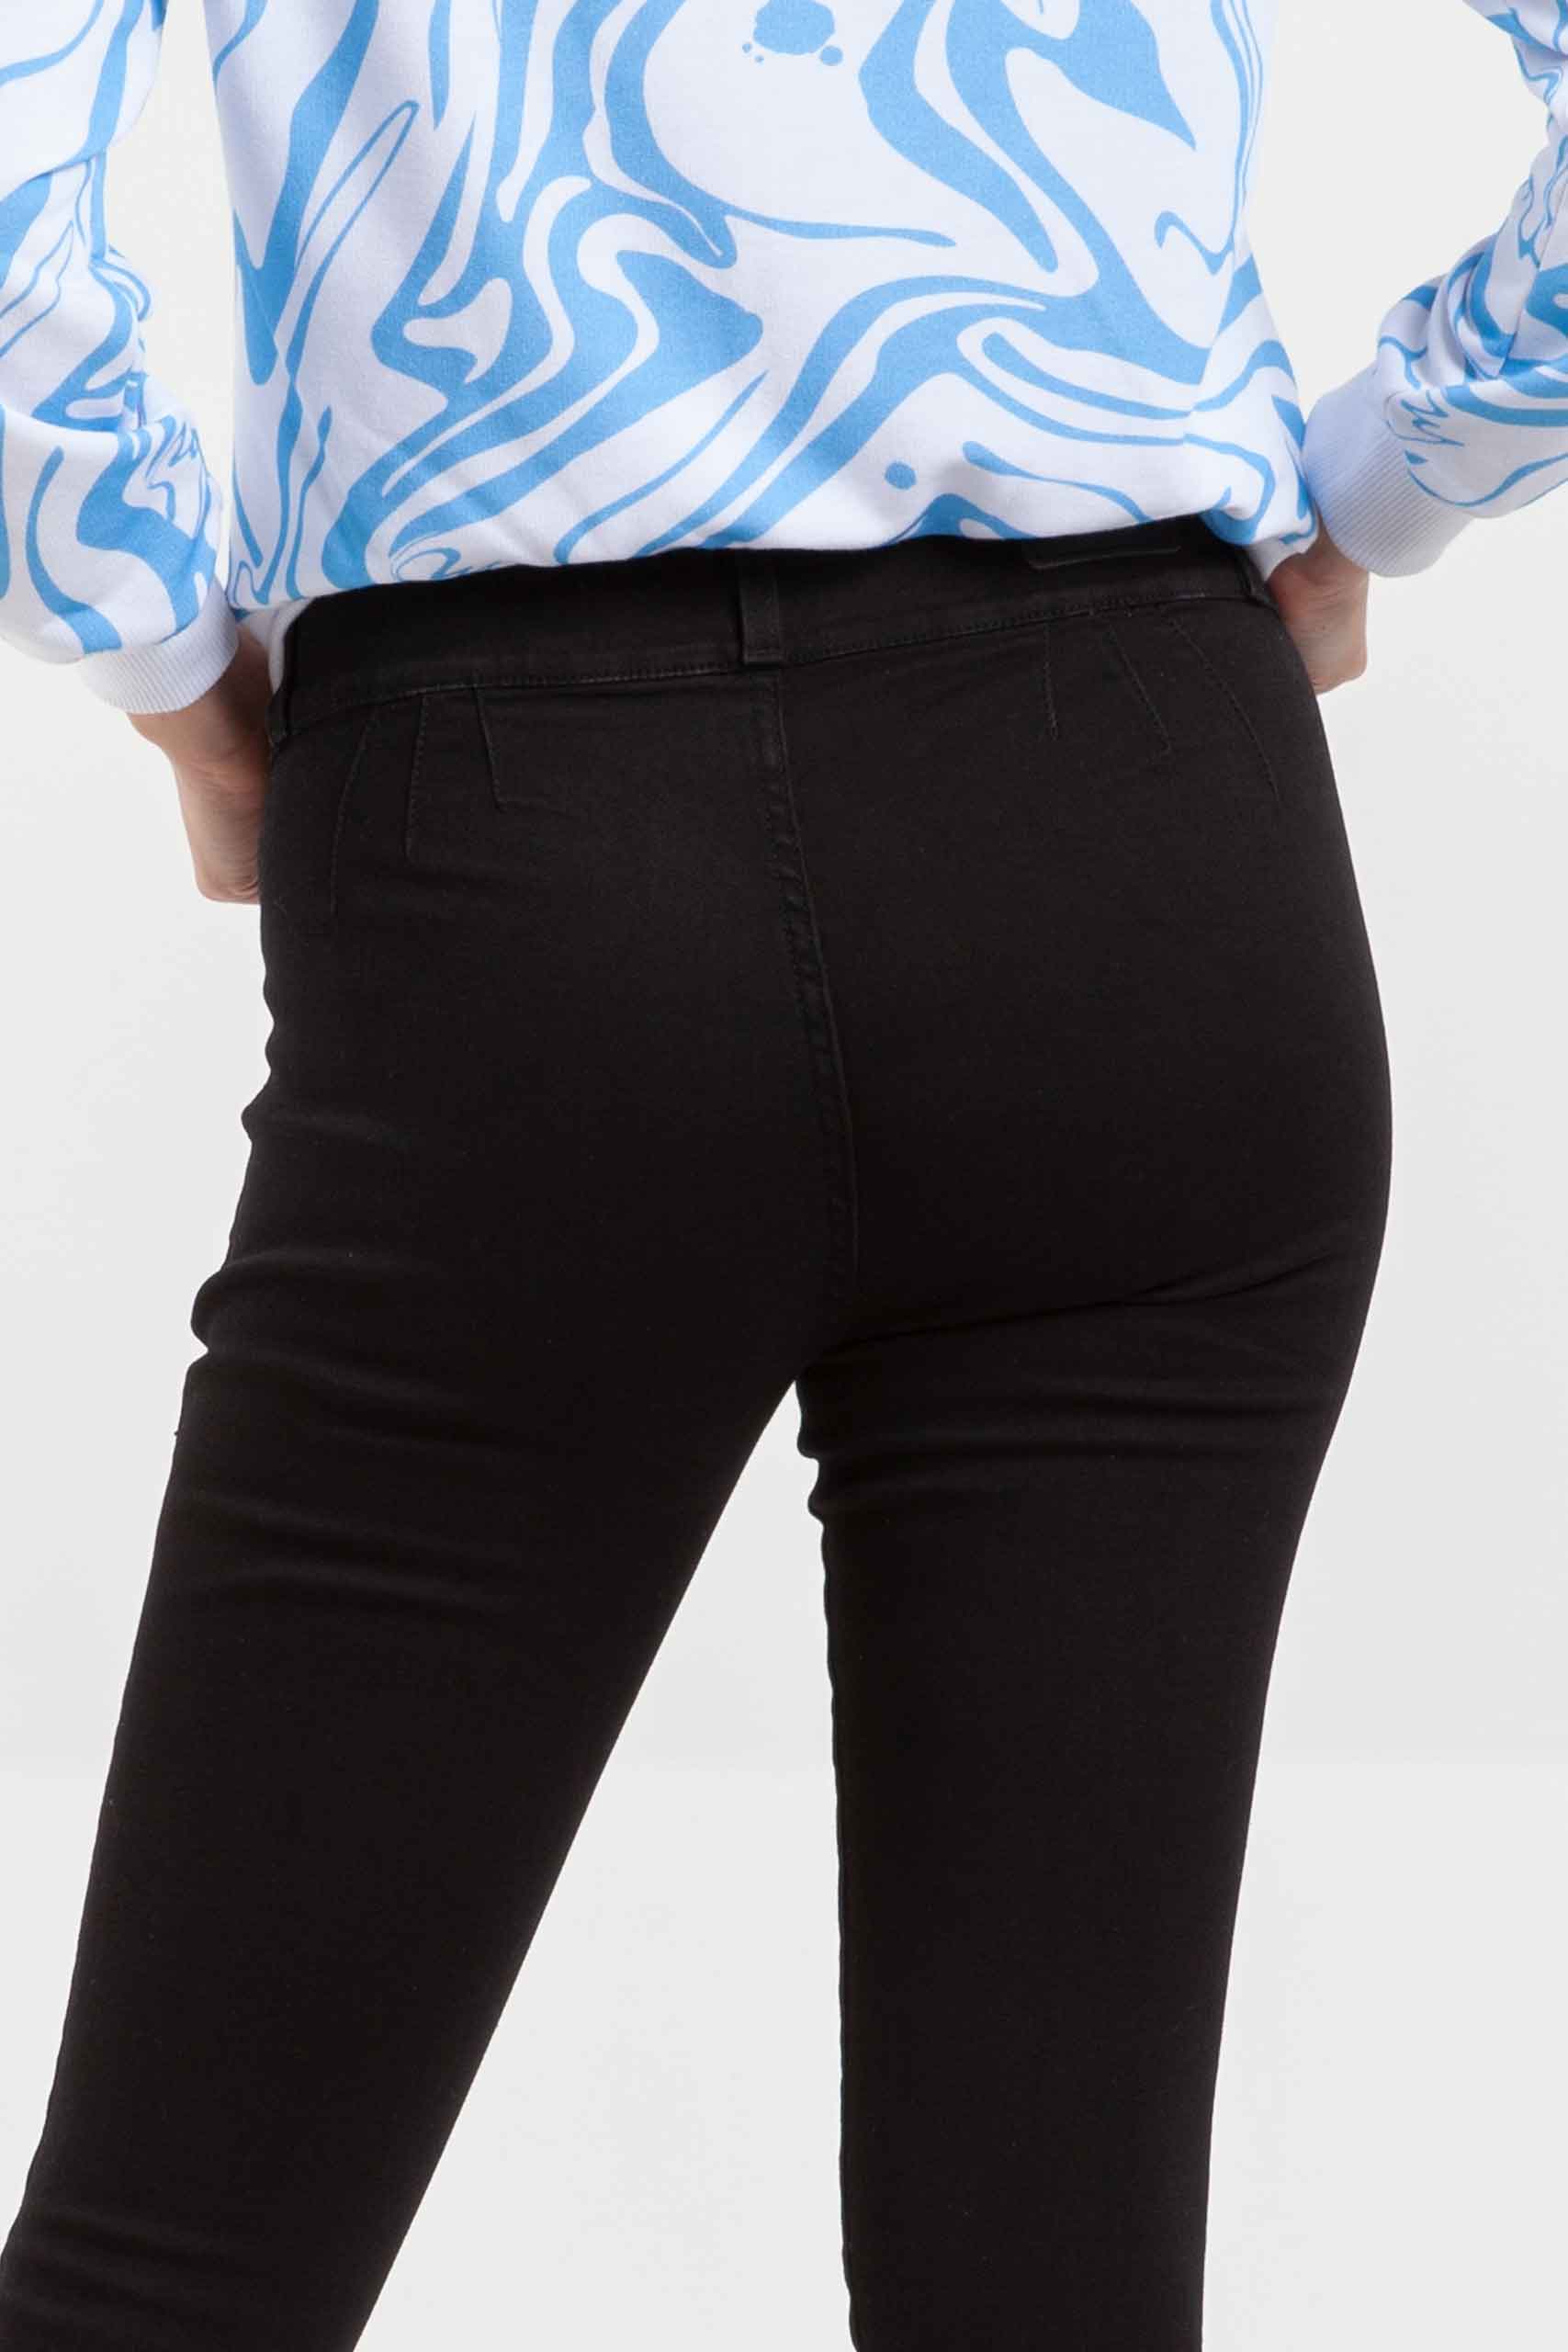 Vista posterior de jean de color negro de pierna super ajustada de marca lee